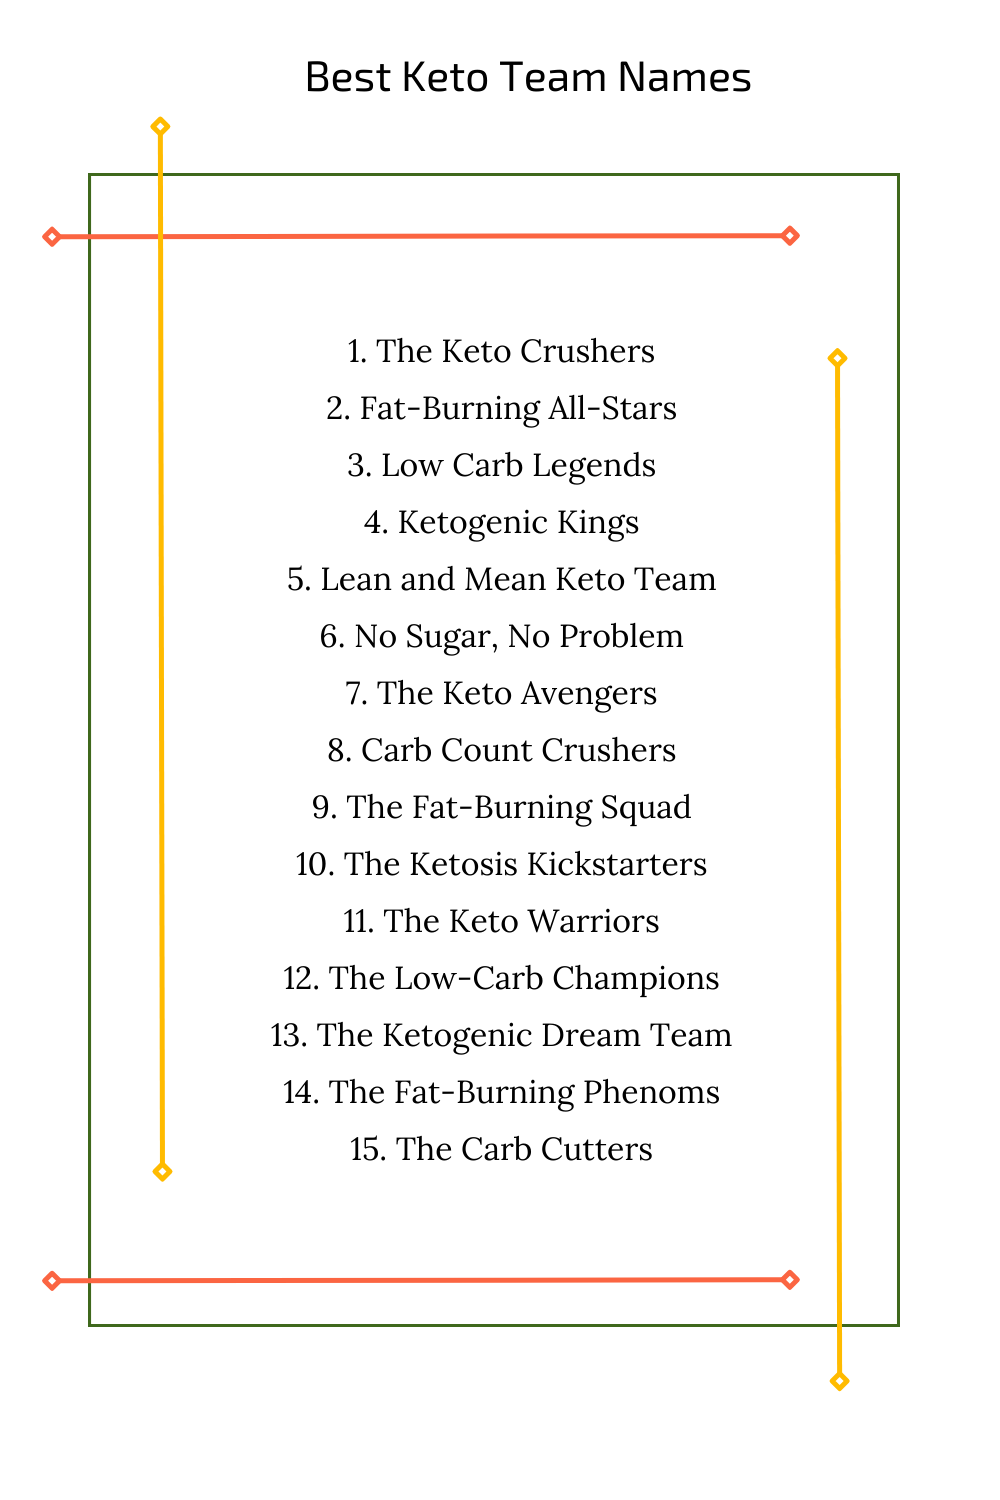 Best Keto Team Names